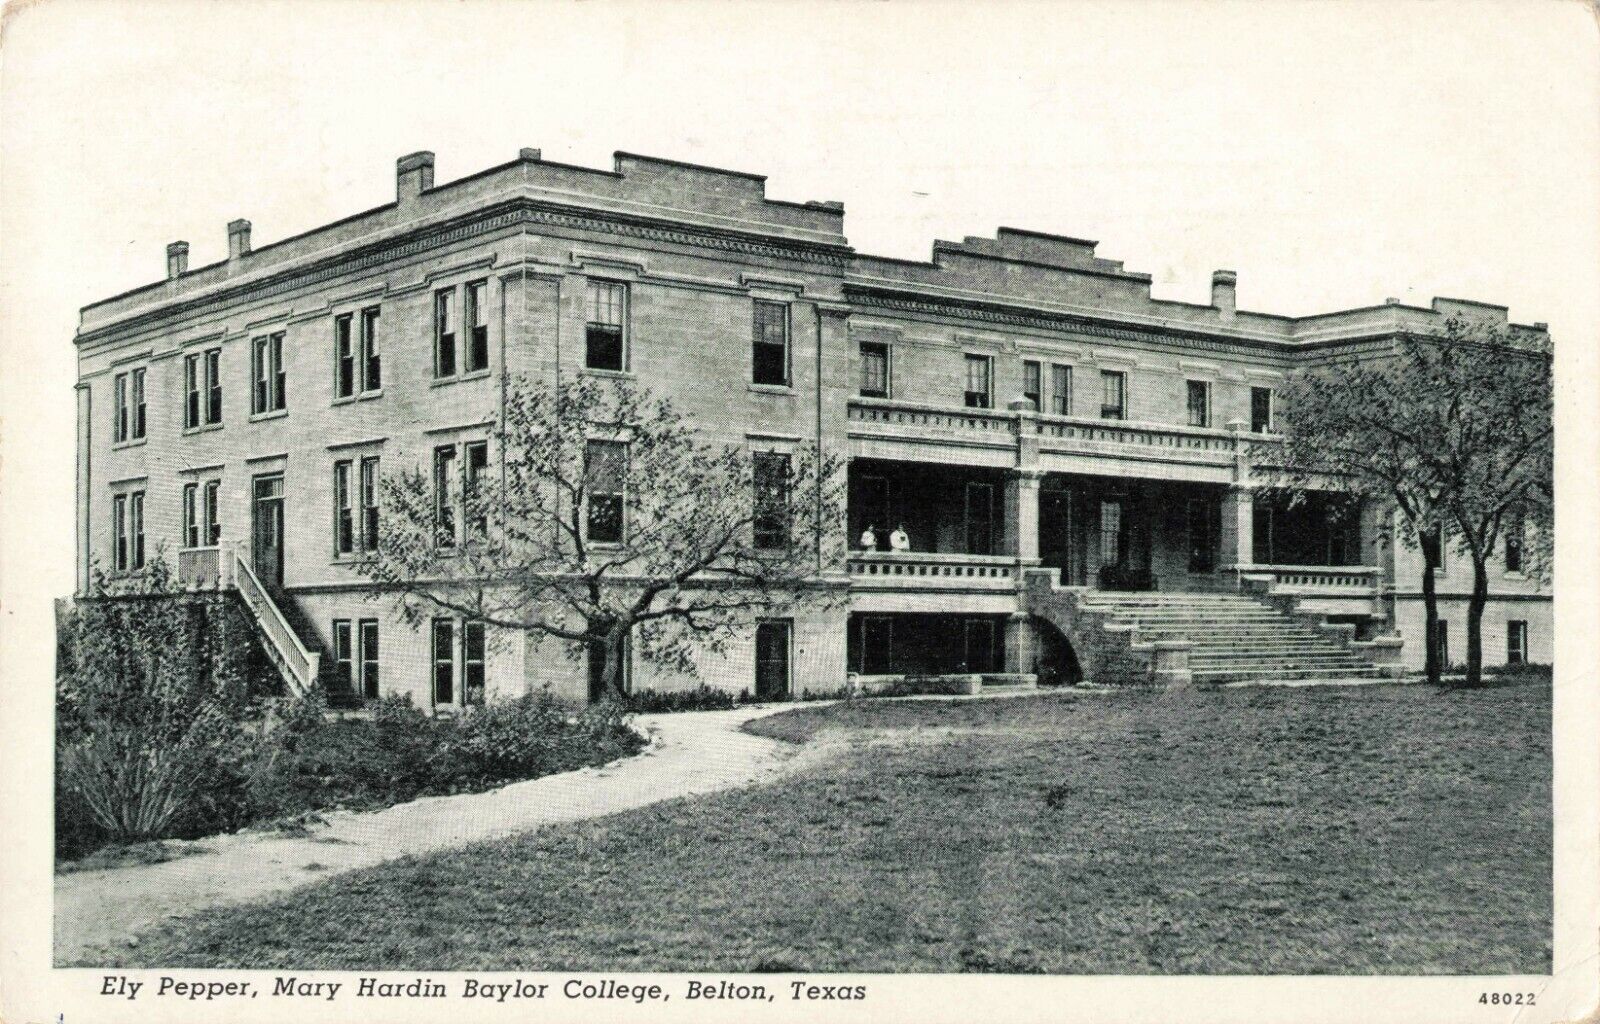 Ely Pepper, Mary Hardin Baylor College, Belton, Texas TX - 1939 Vintage Postcard